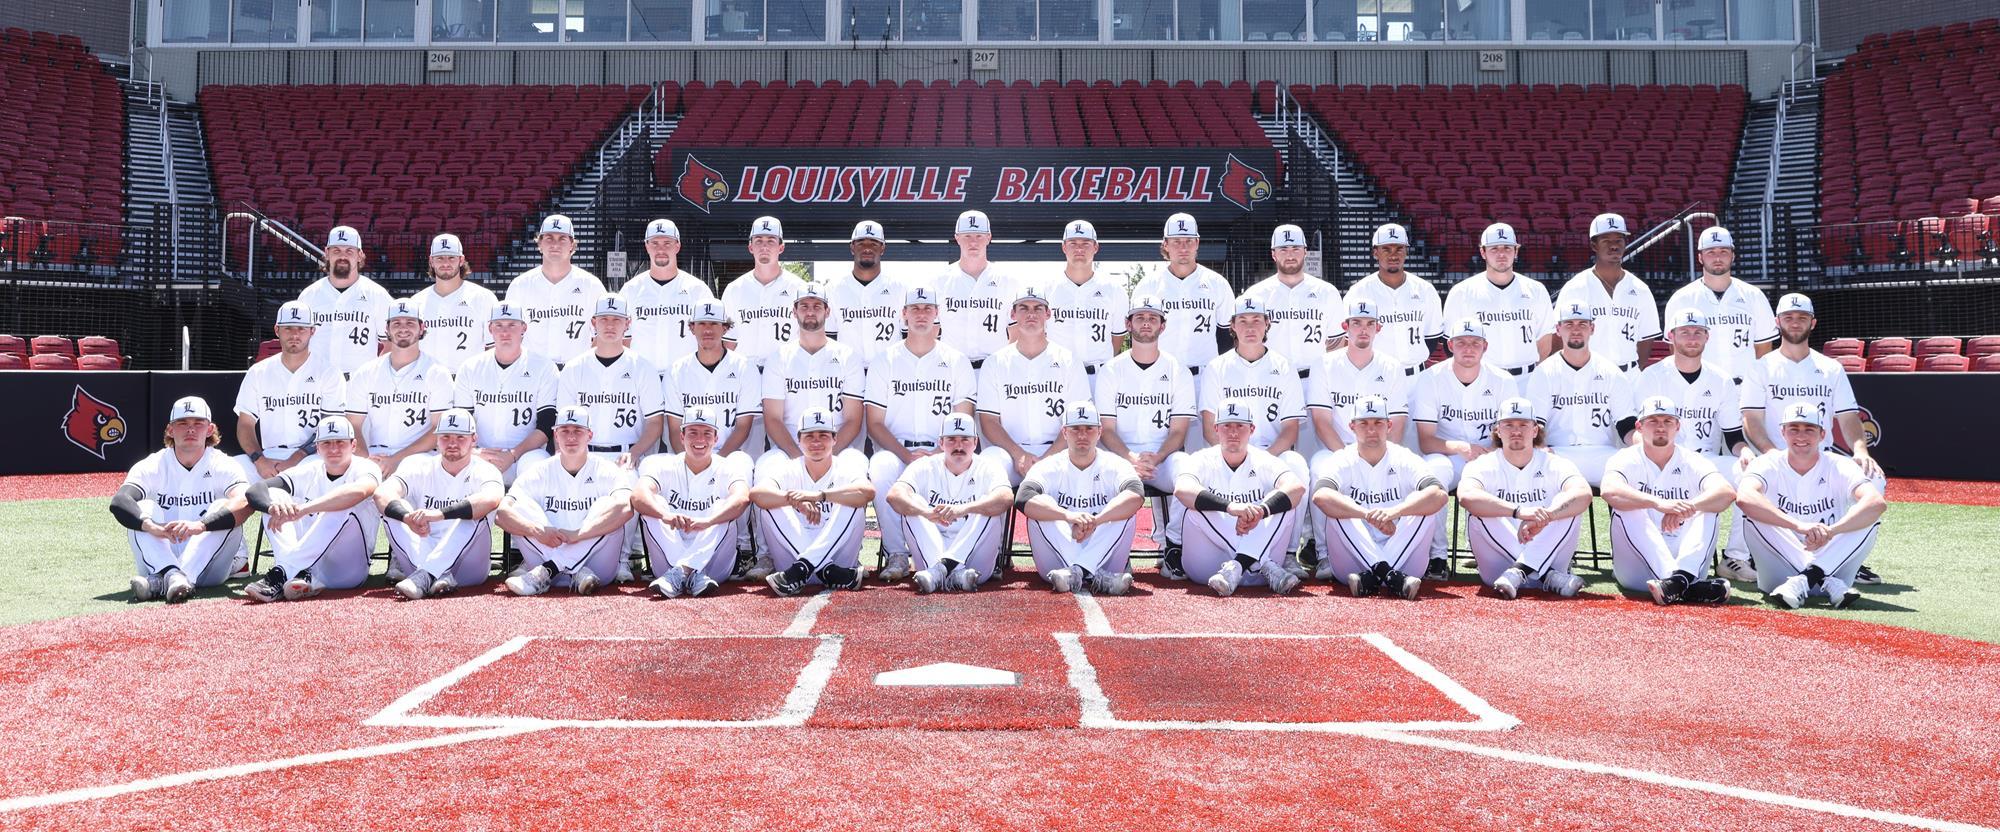 2022 Baseball Roster - University of Louisville Athletics